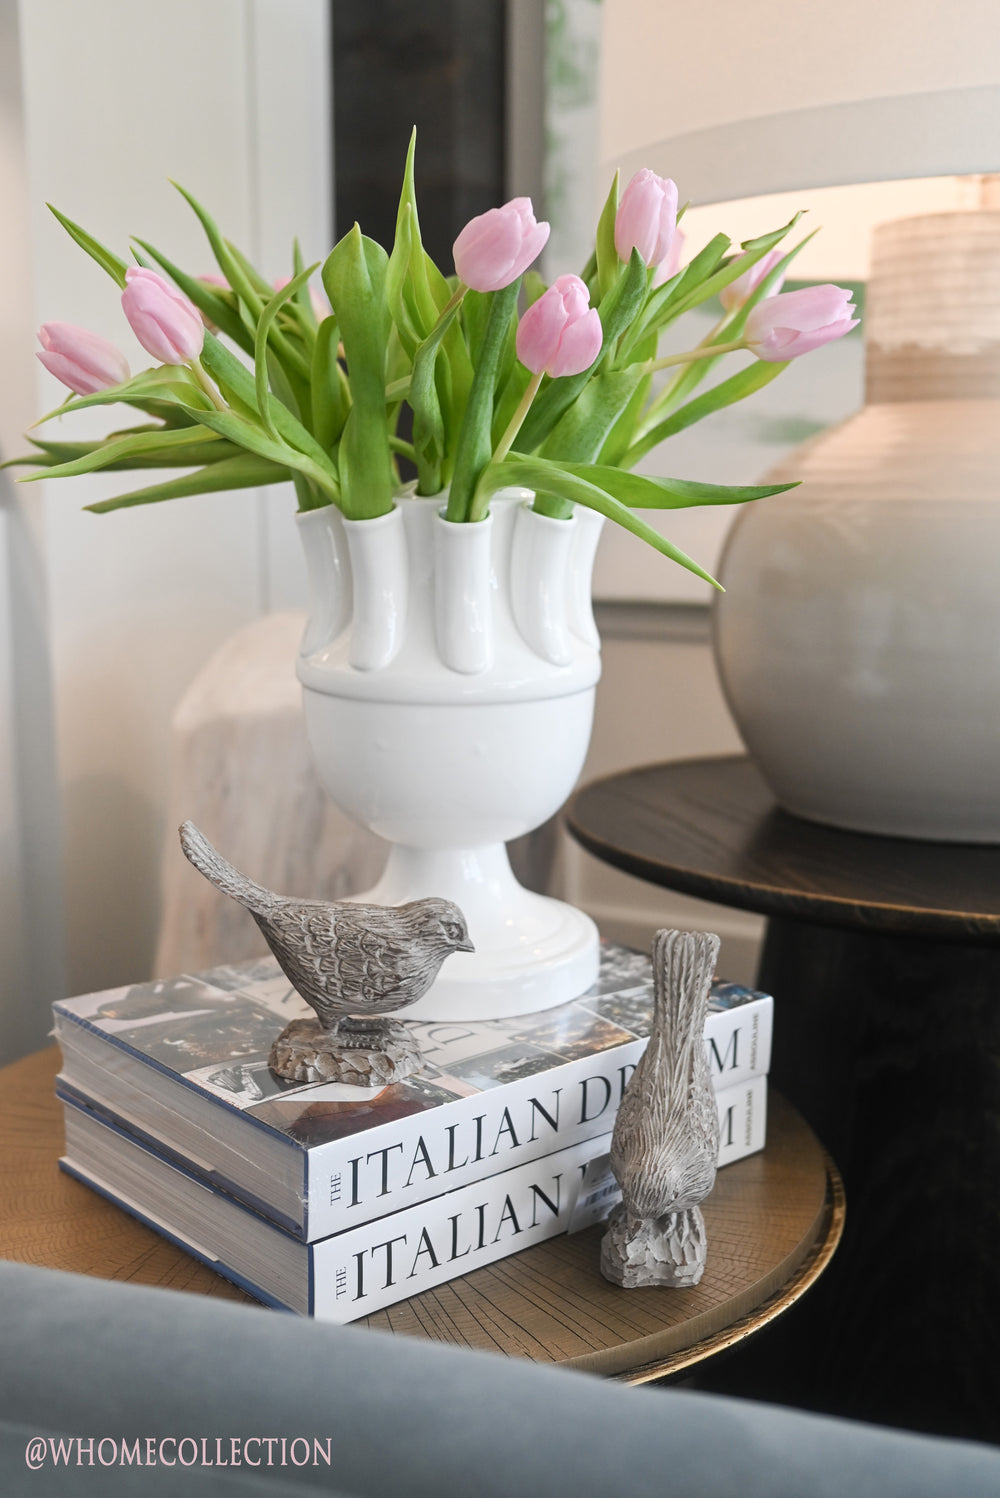 Tulipiere, White Ceramic